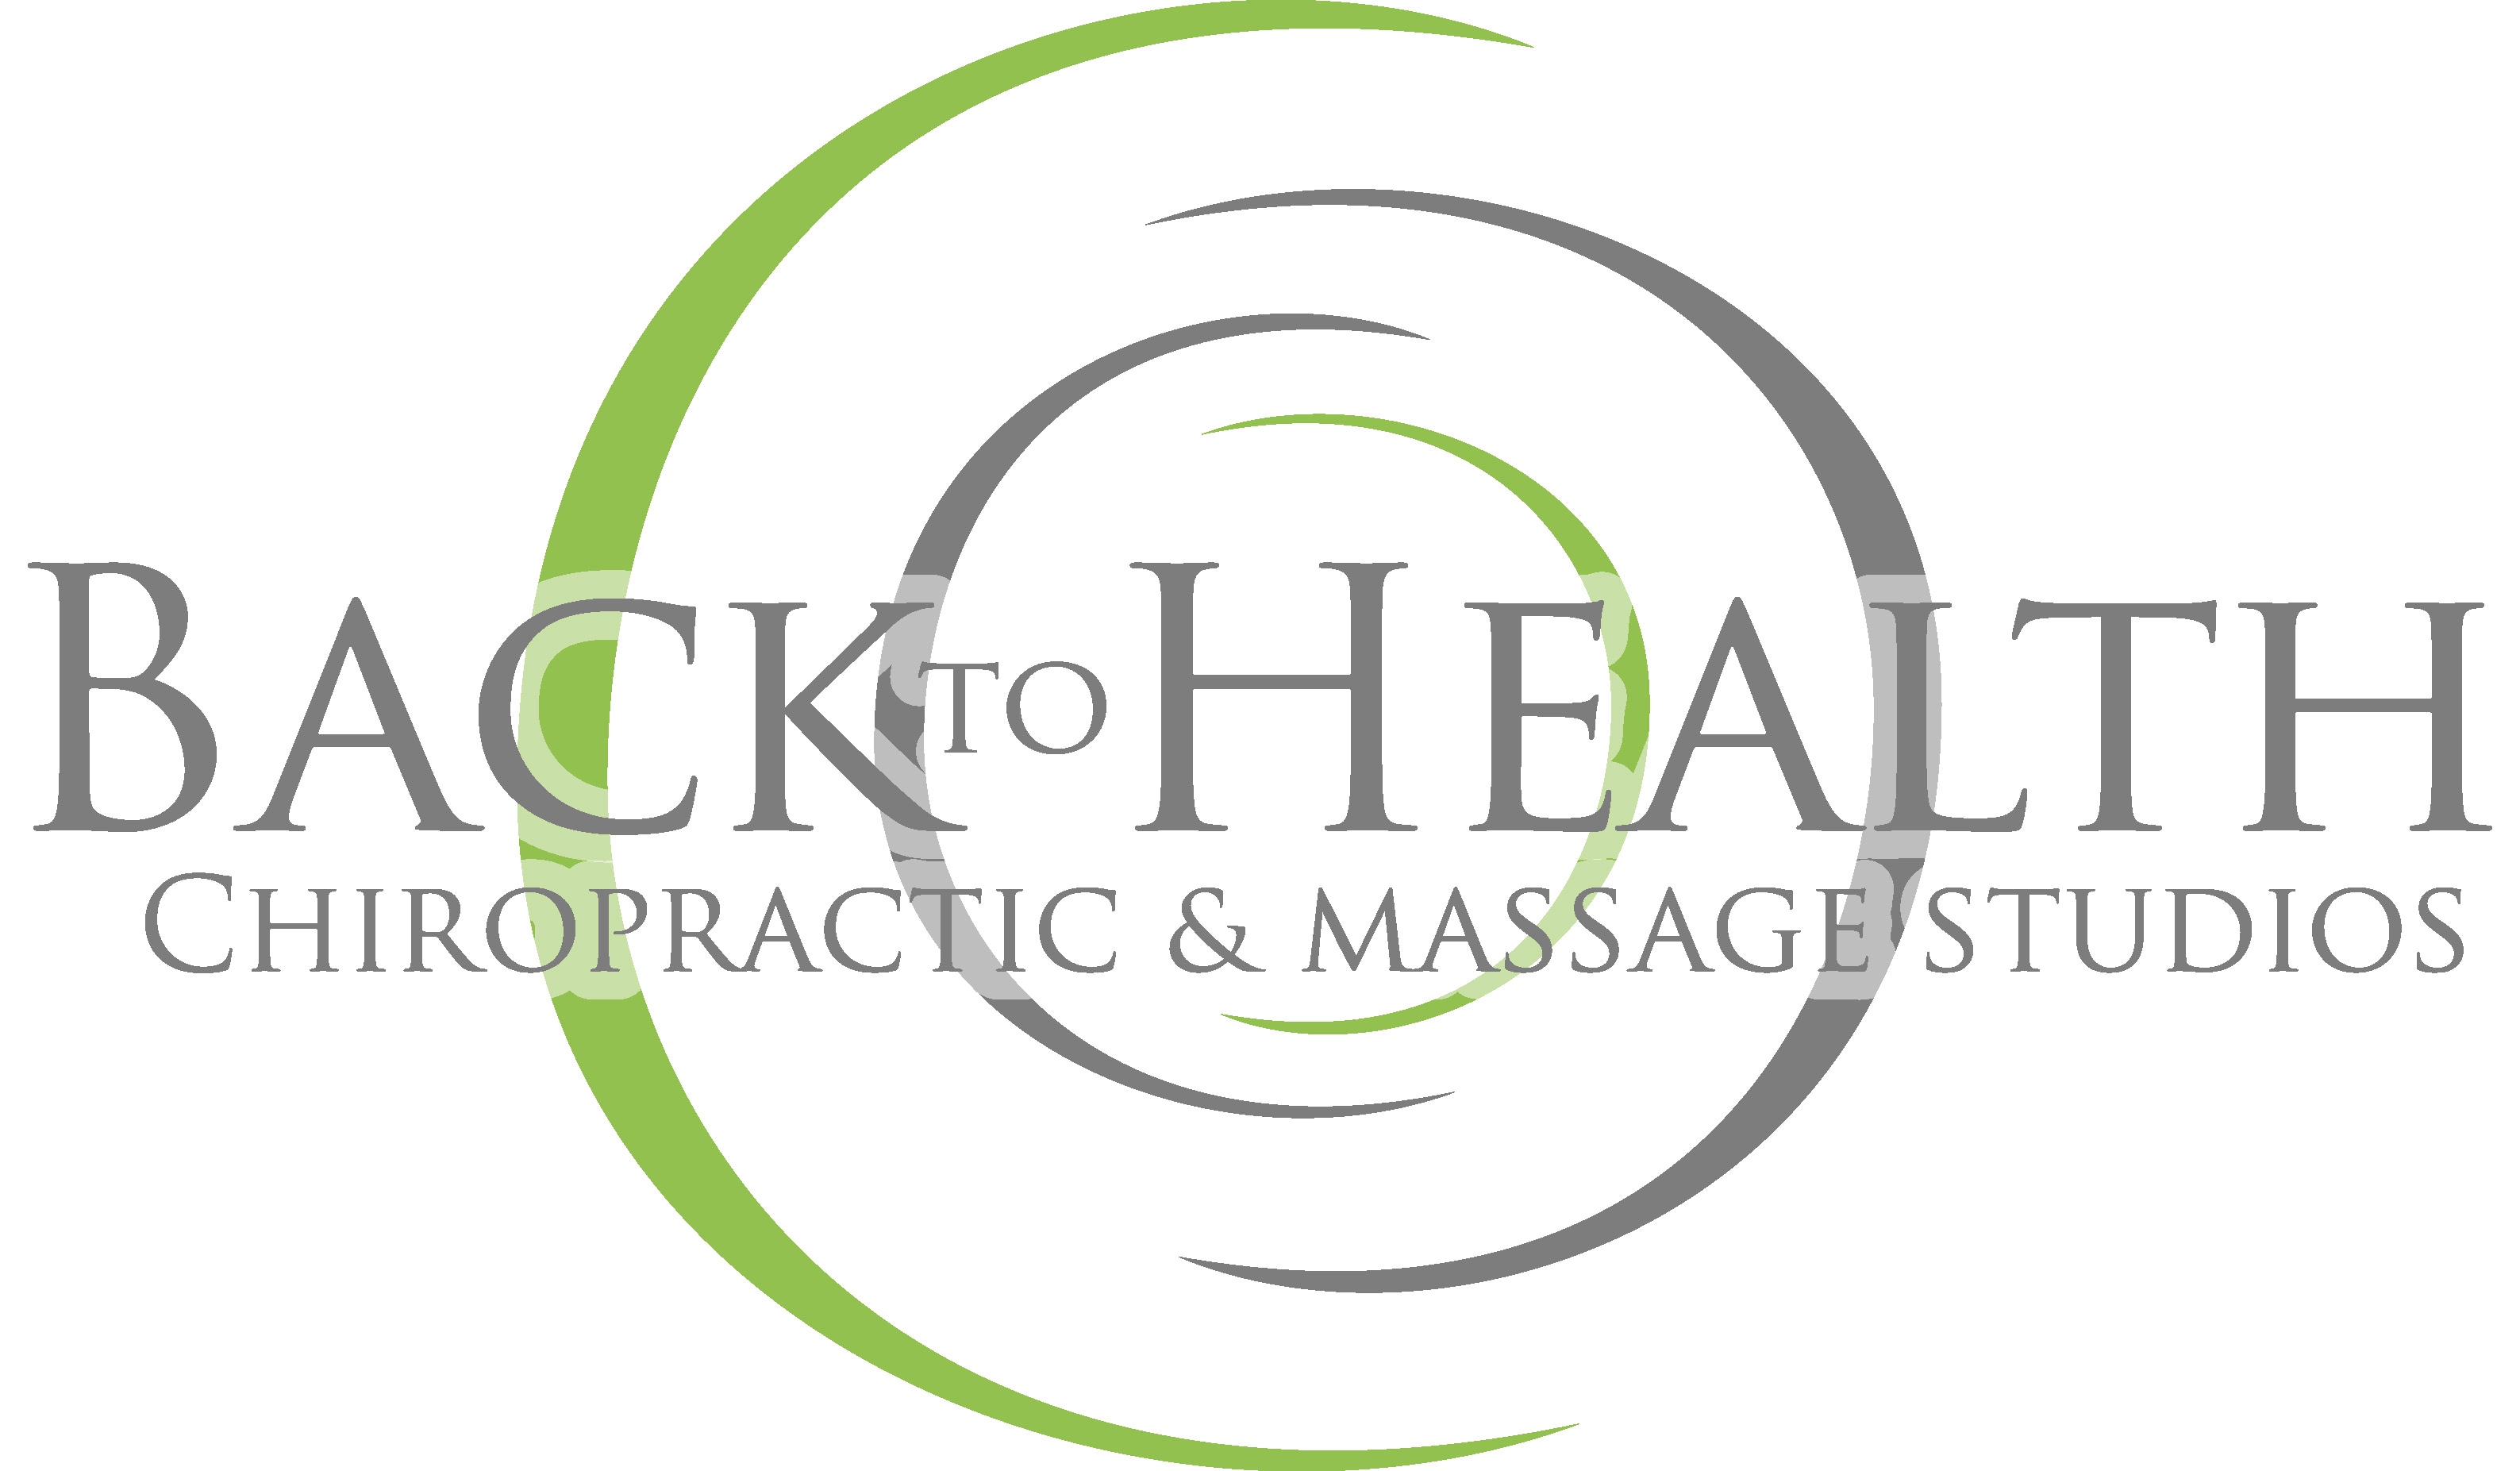 Back To Health Chiropractic Massage Studios - Chiropractor In Richfield Mn Usa Back To Health Chiropractic Massage Studios - Chiropractor In Richfield Mn Usa